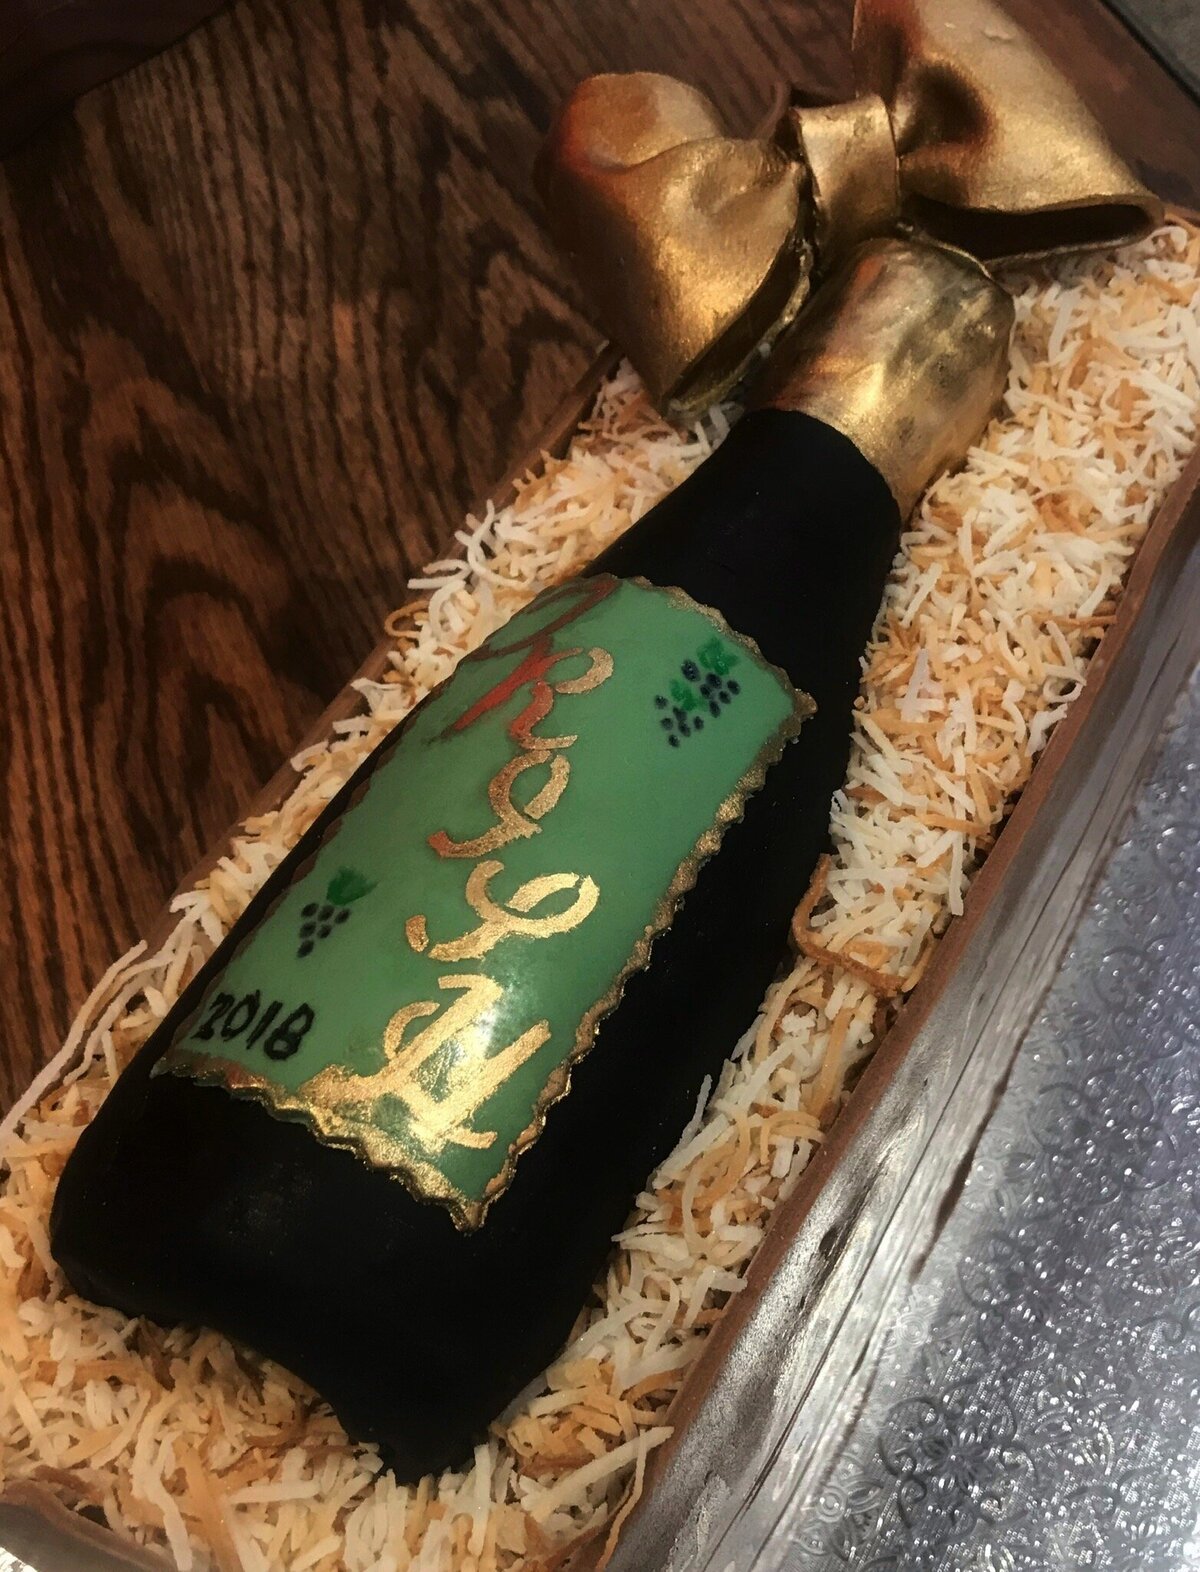 Edible wine bottle with decorative label in woodgrain wine box cake